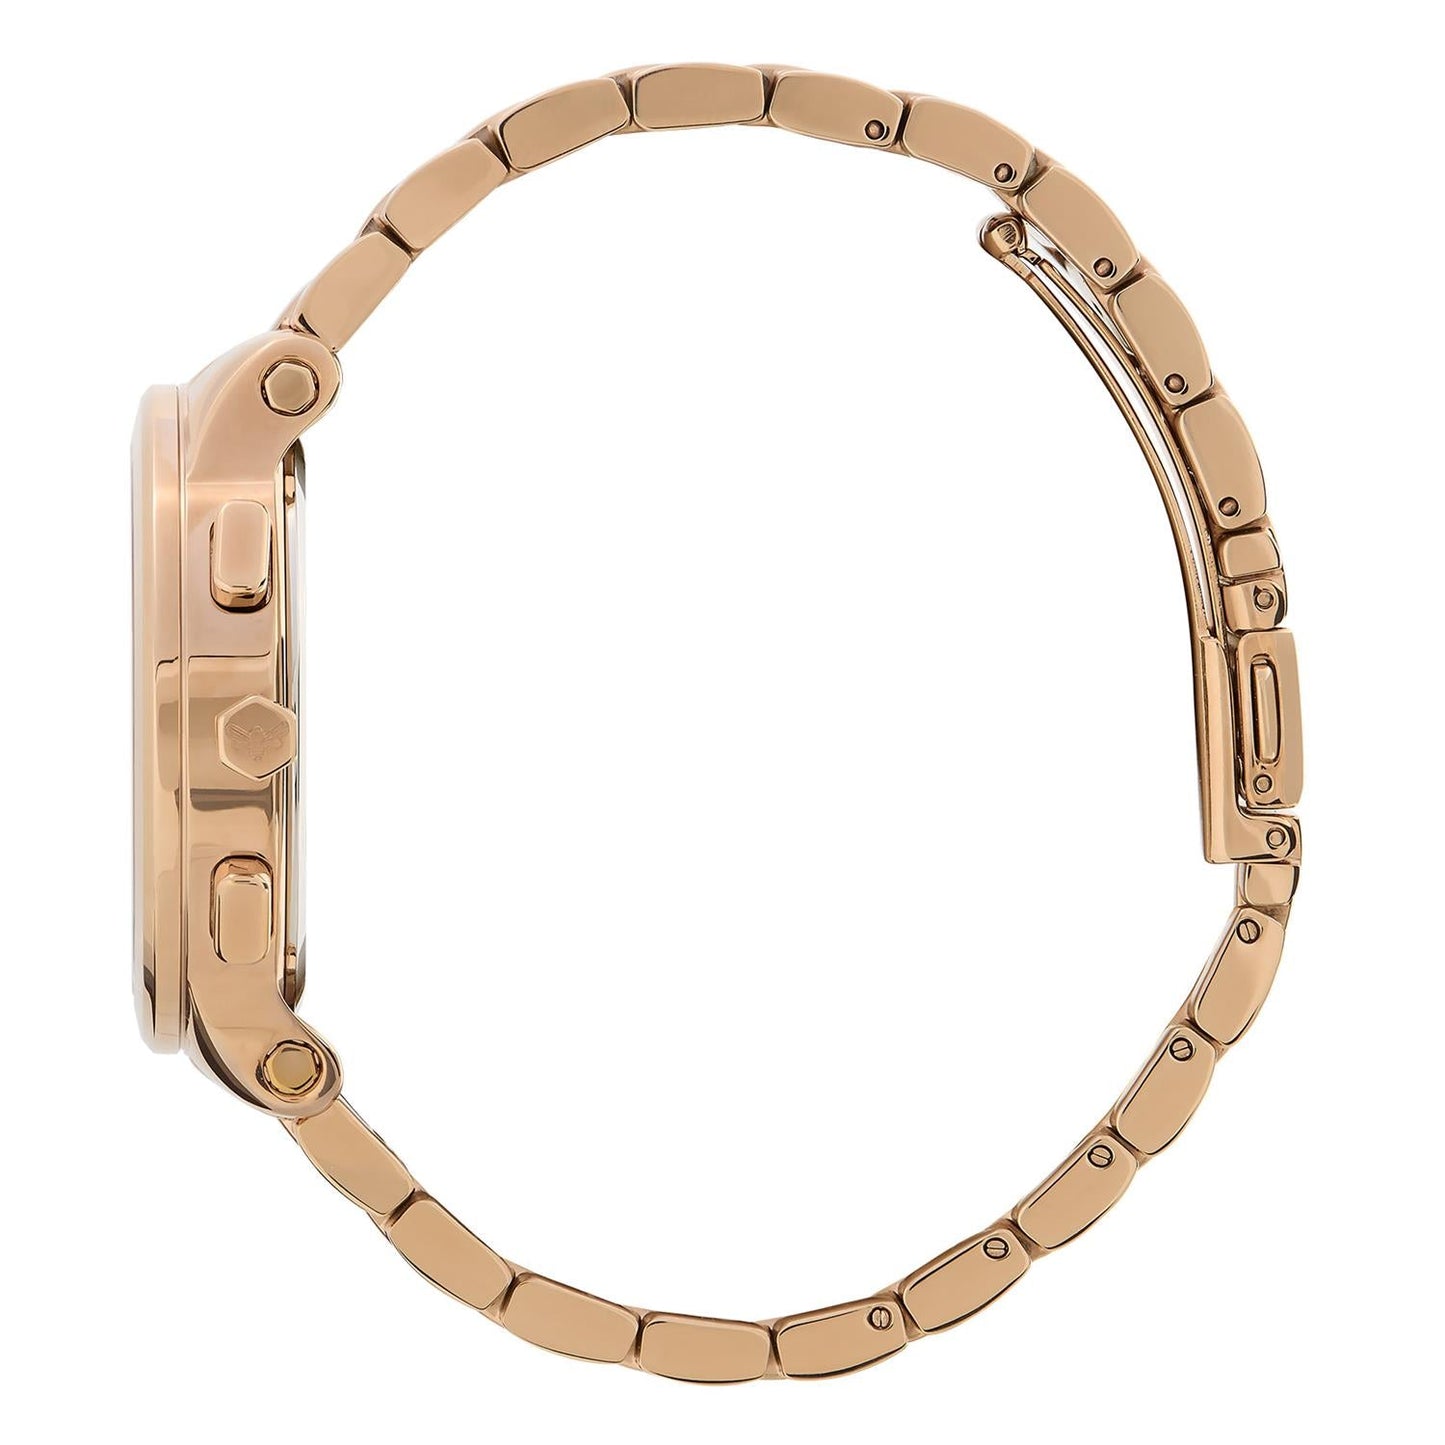 Olivia Burton Multi-Function Blush Gold Watch 24000055